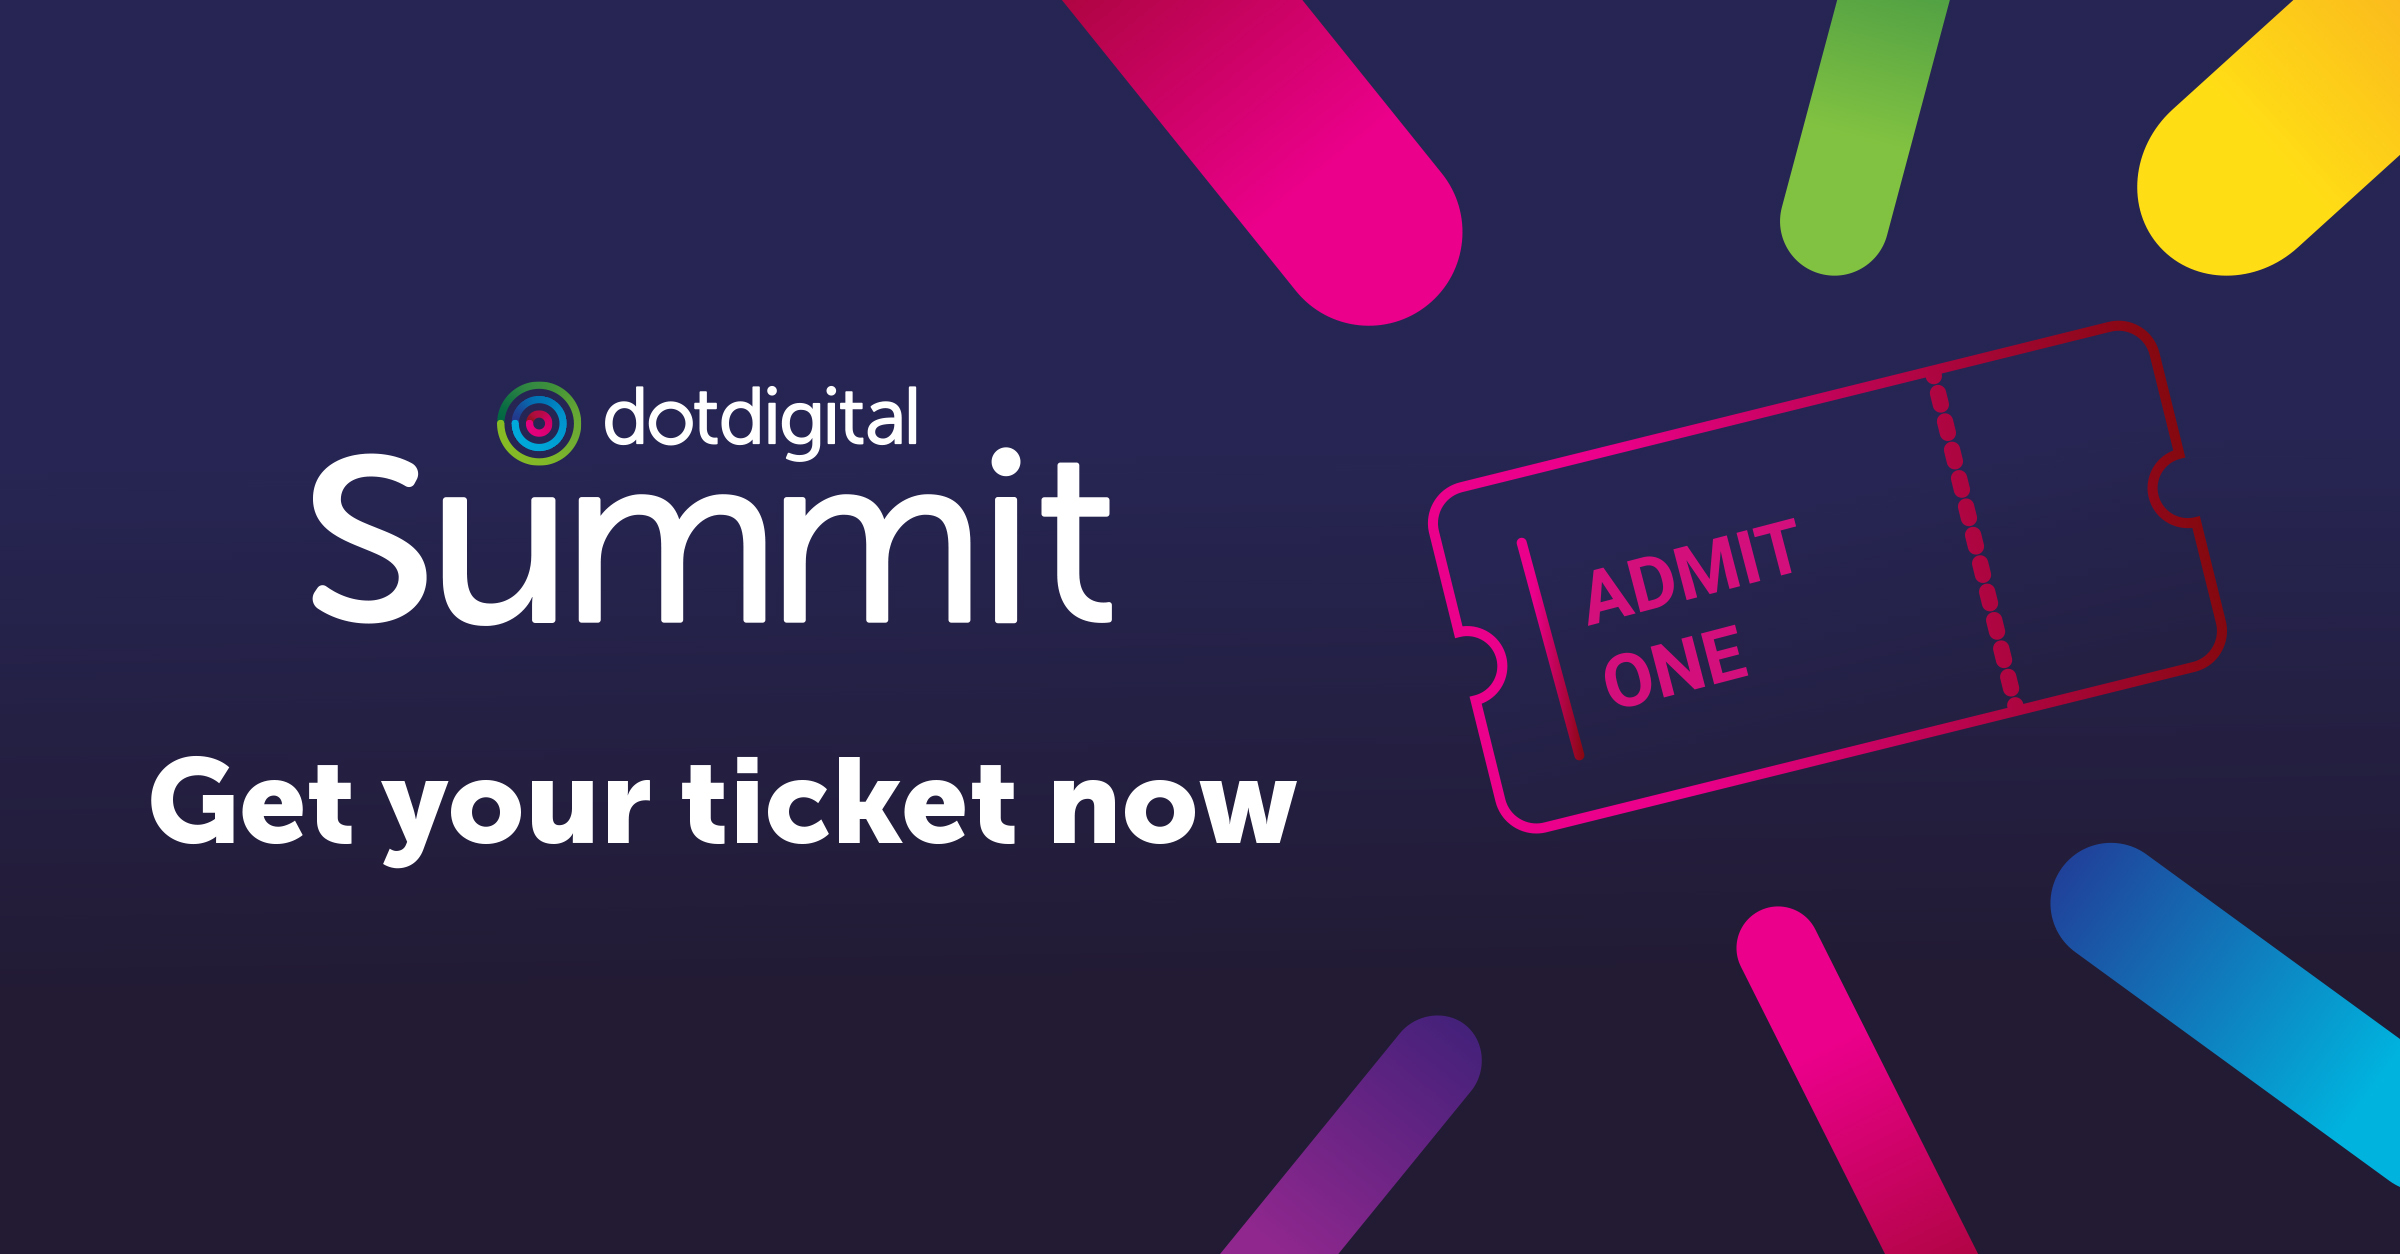 Get your ticket now - The Dotdigital Summit